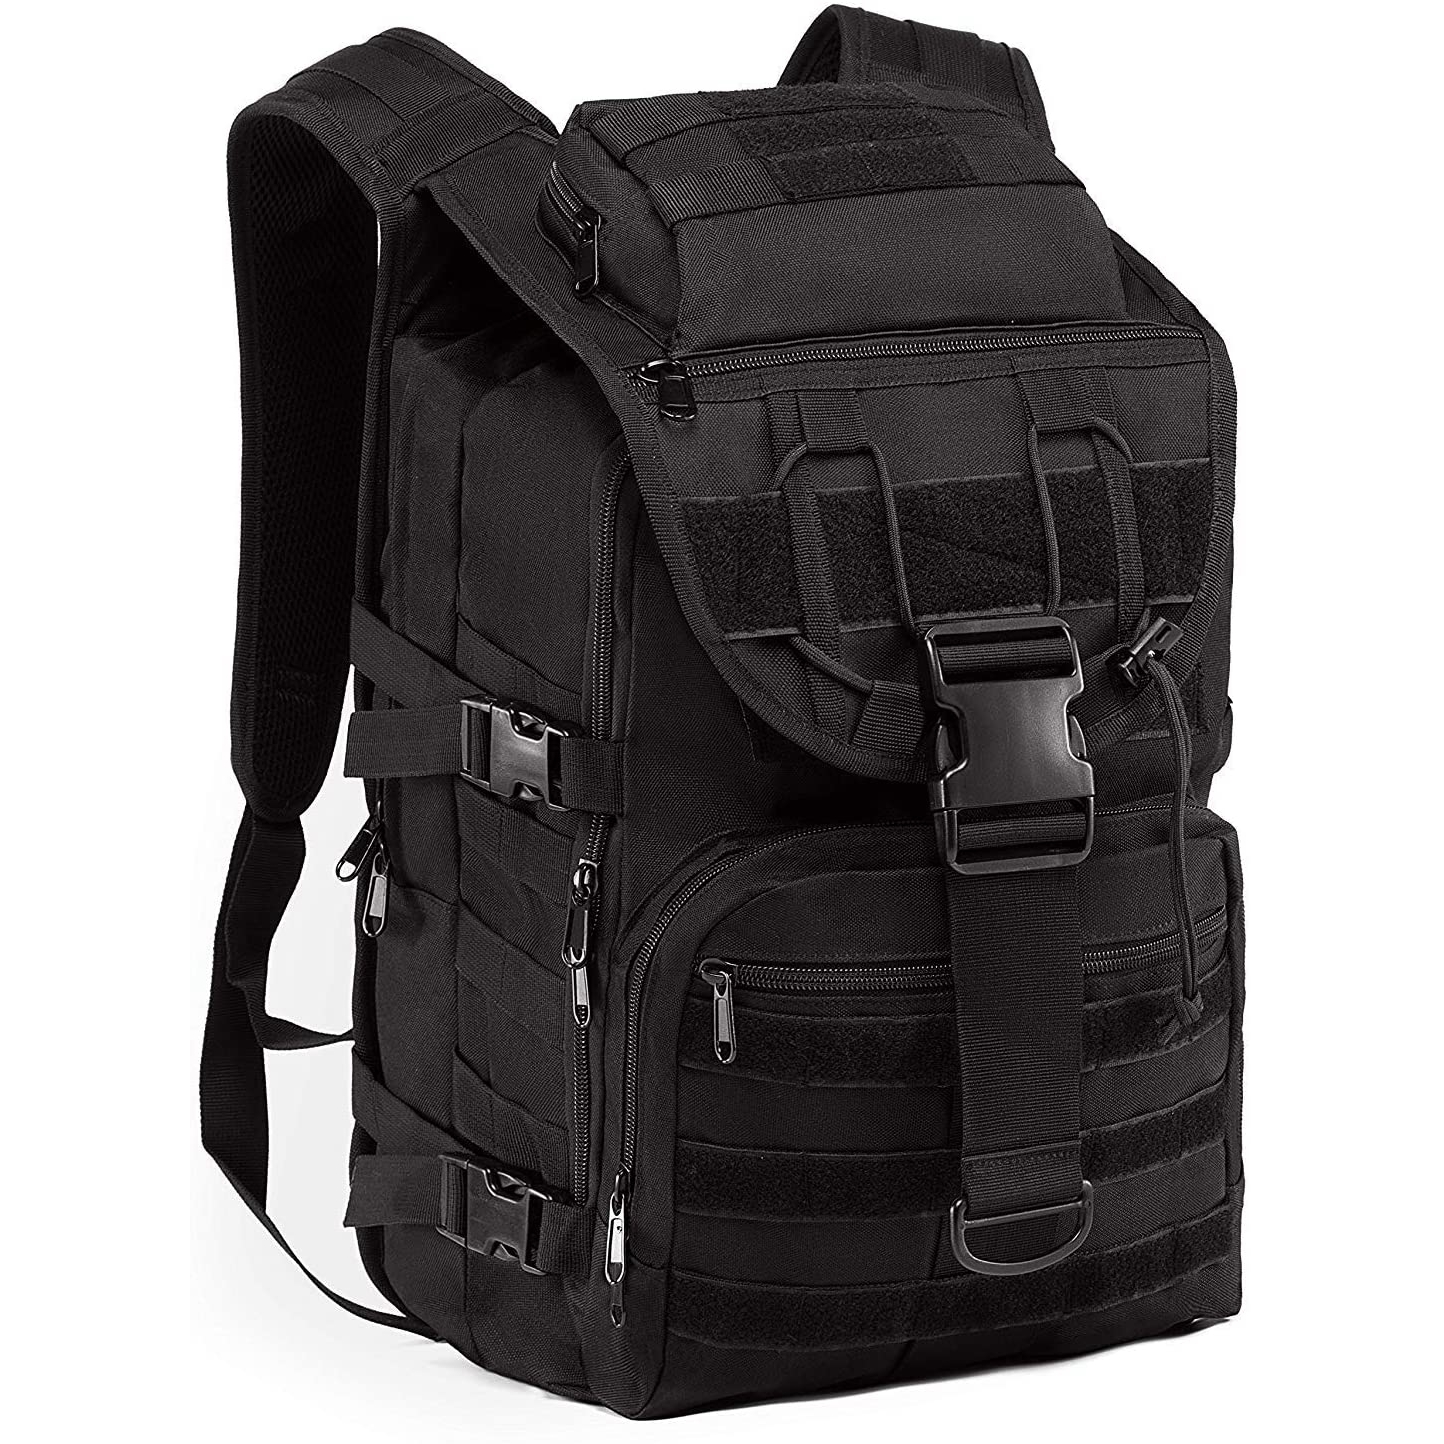 2020 Large Waterproof Tactical Military Backpack Bag